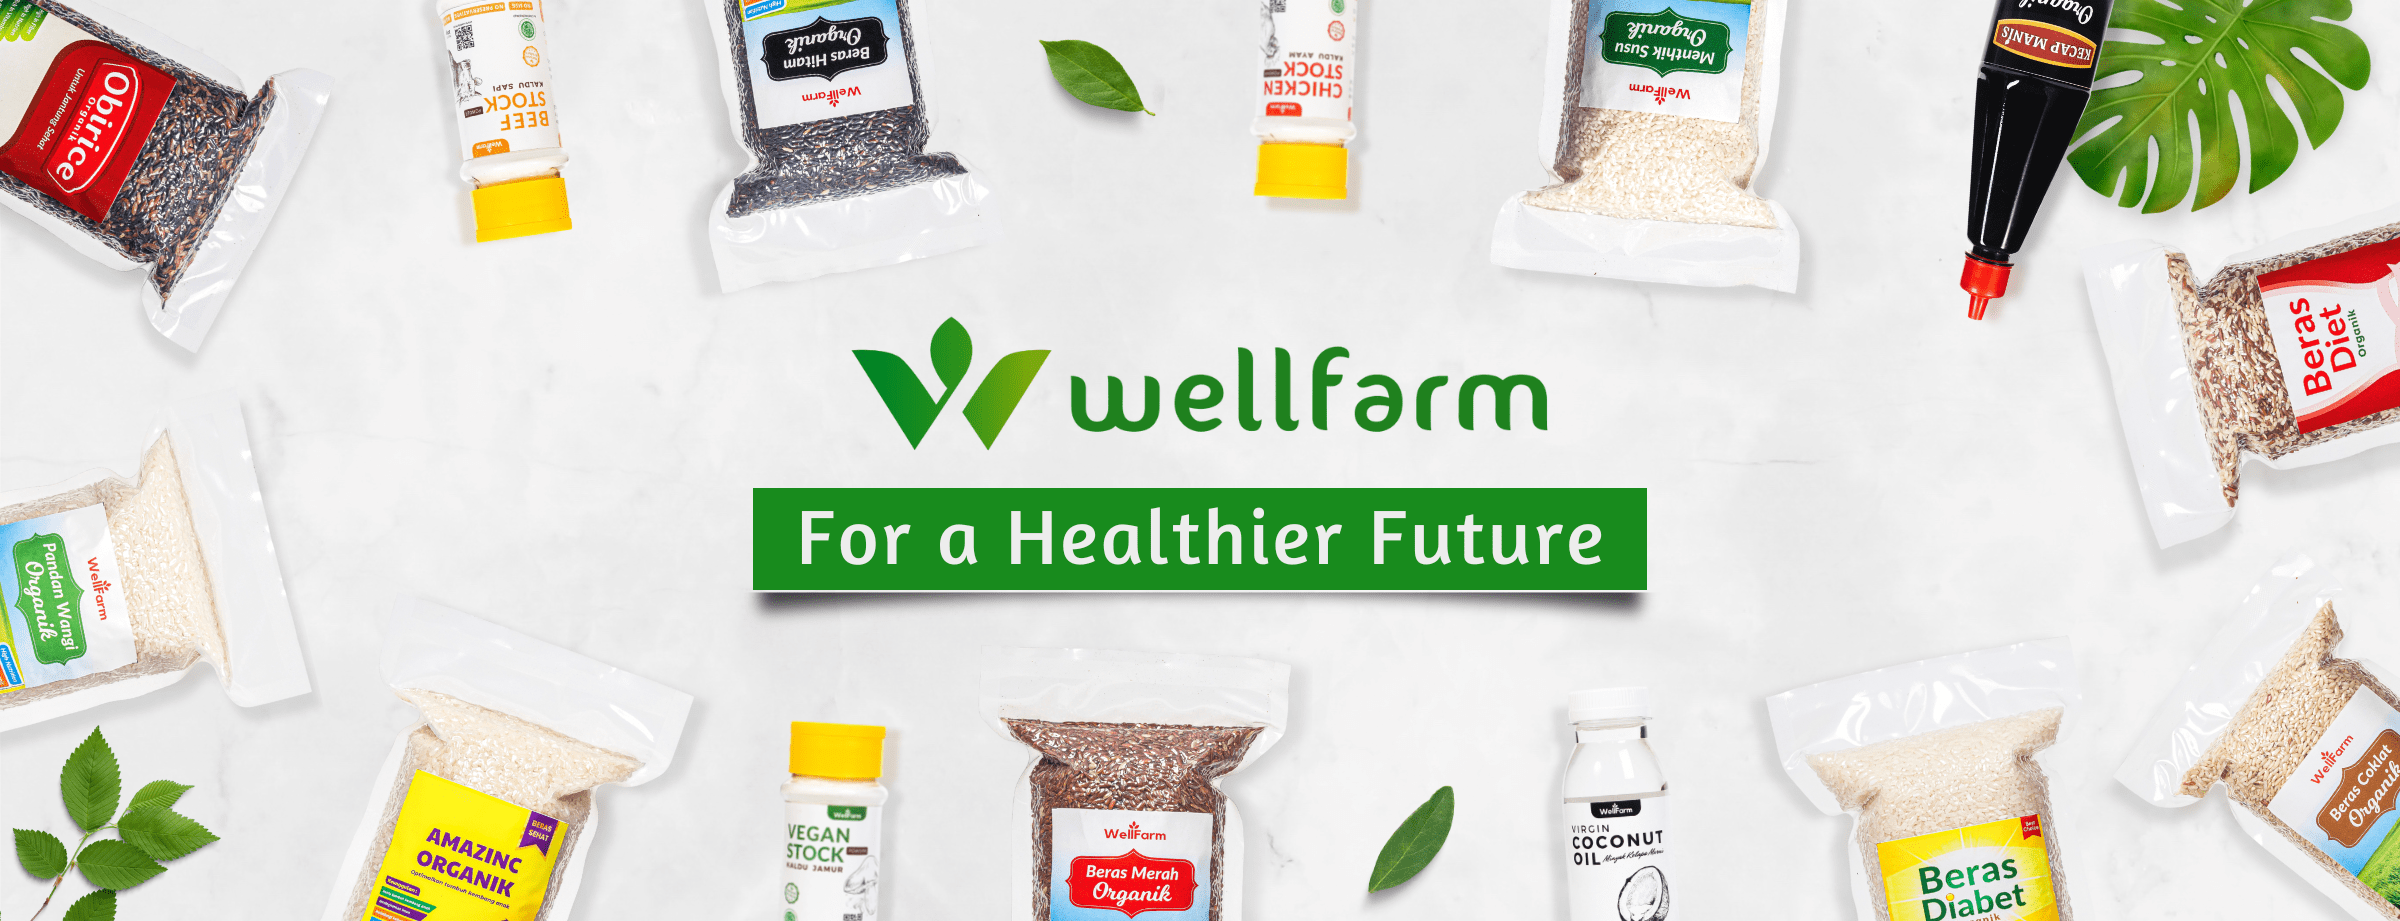 wellfarm Healthy Food For a Healthy Future